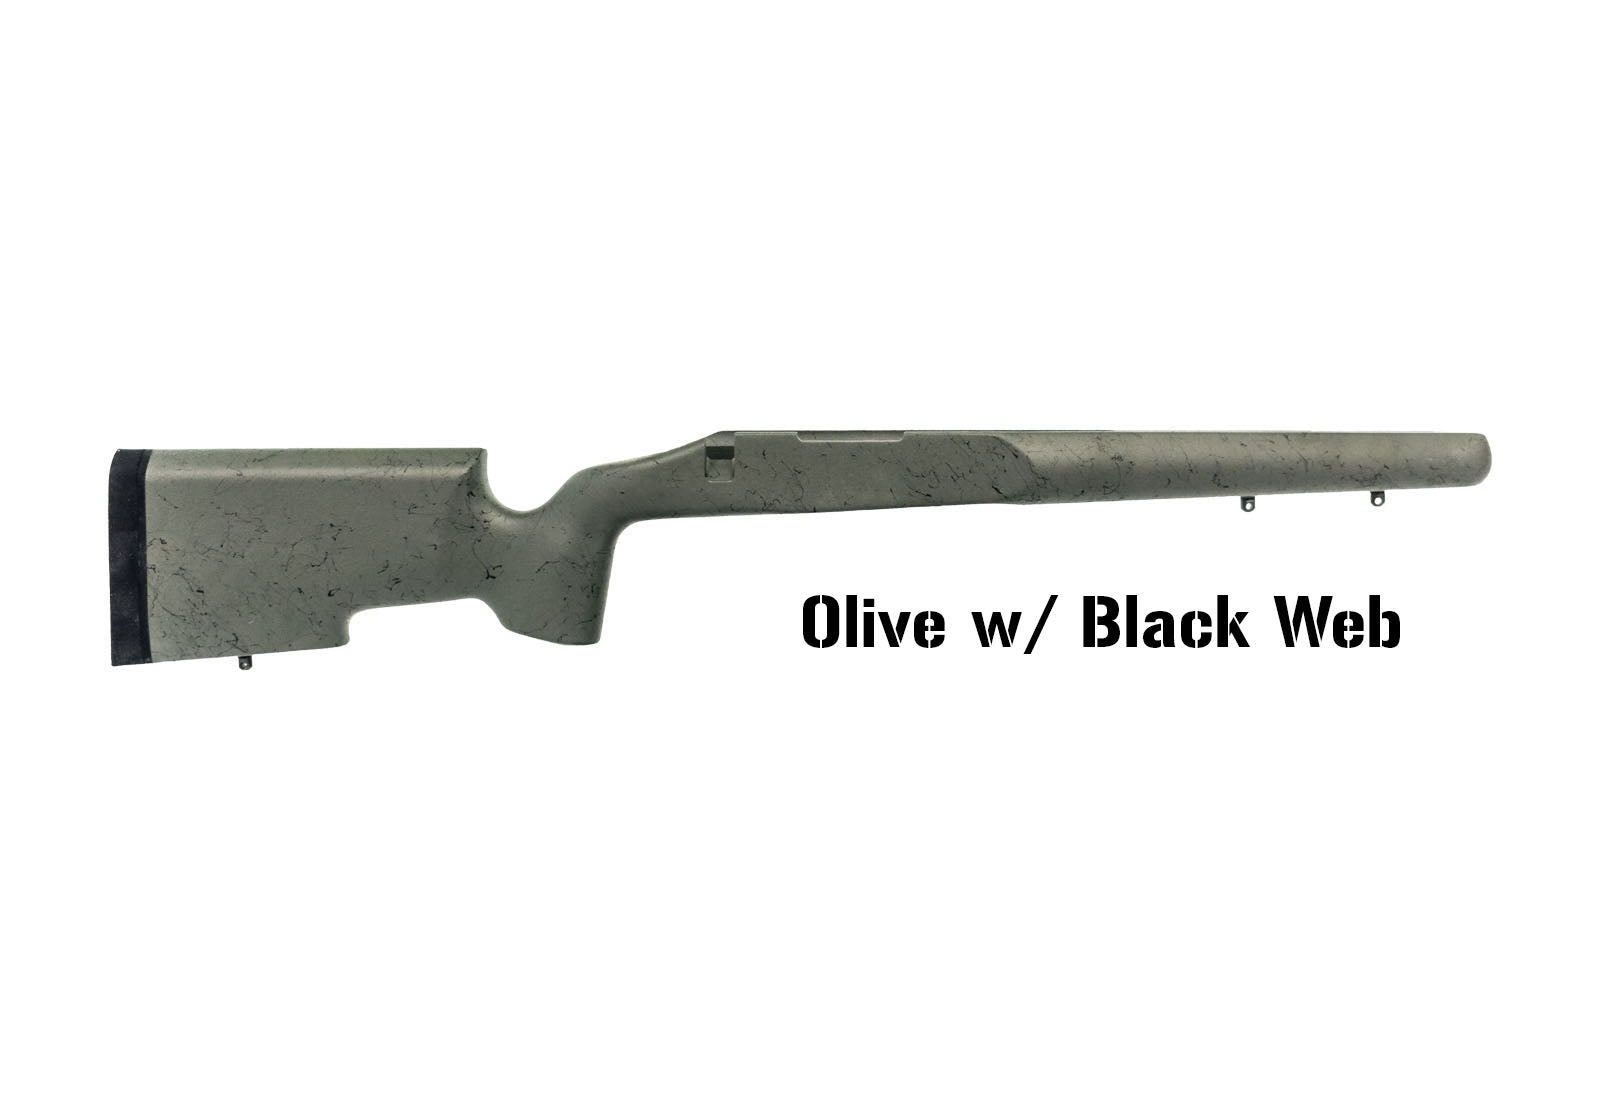 Renegade - Right Hand Rem 700 Long action, M5, Remington Varmint/Sendero barrel.  Painted Olive w/ Black Web